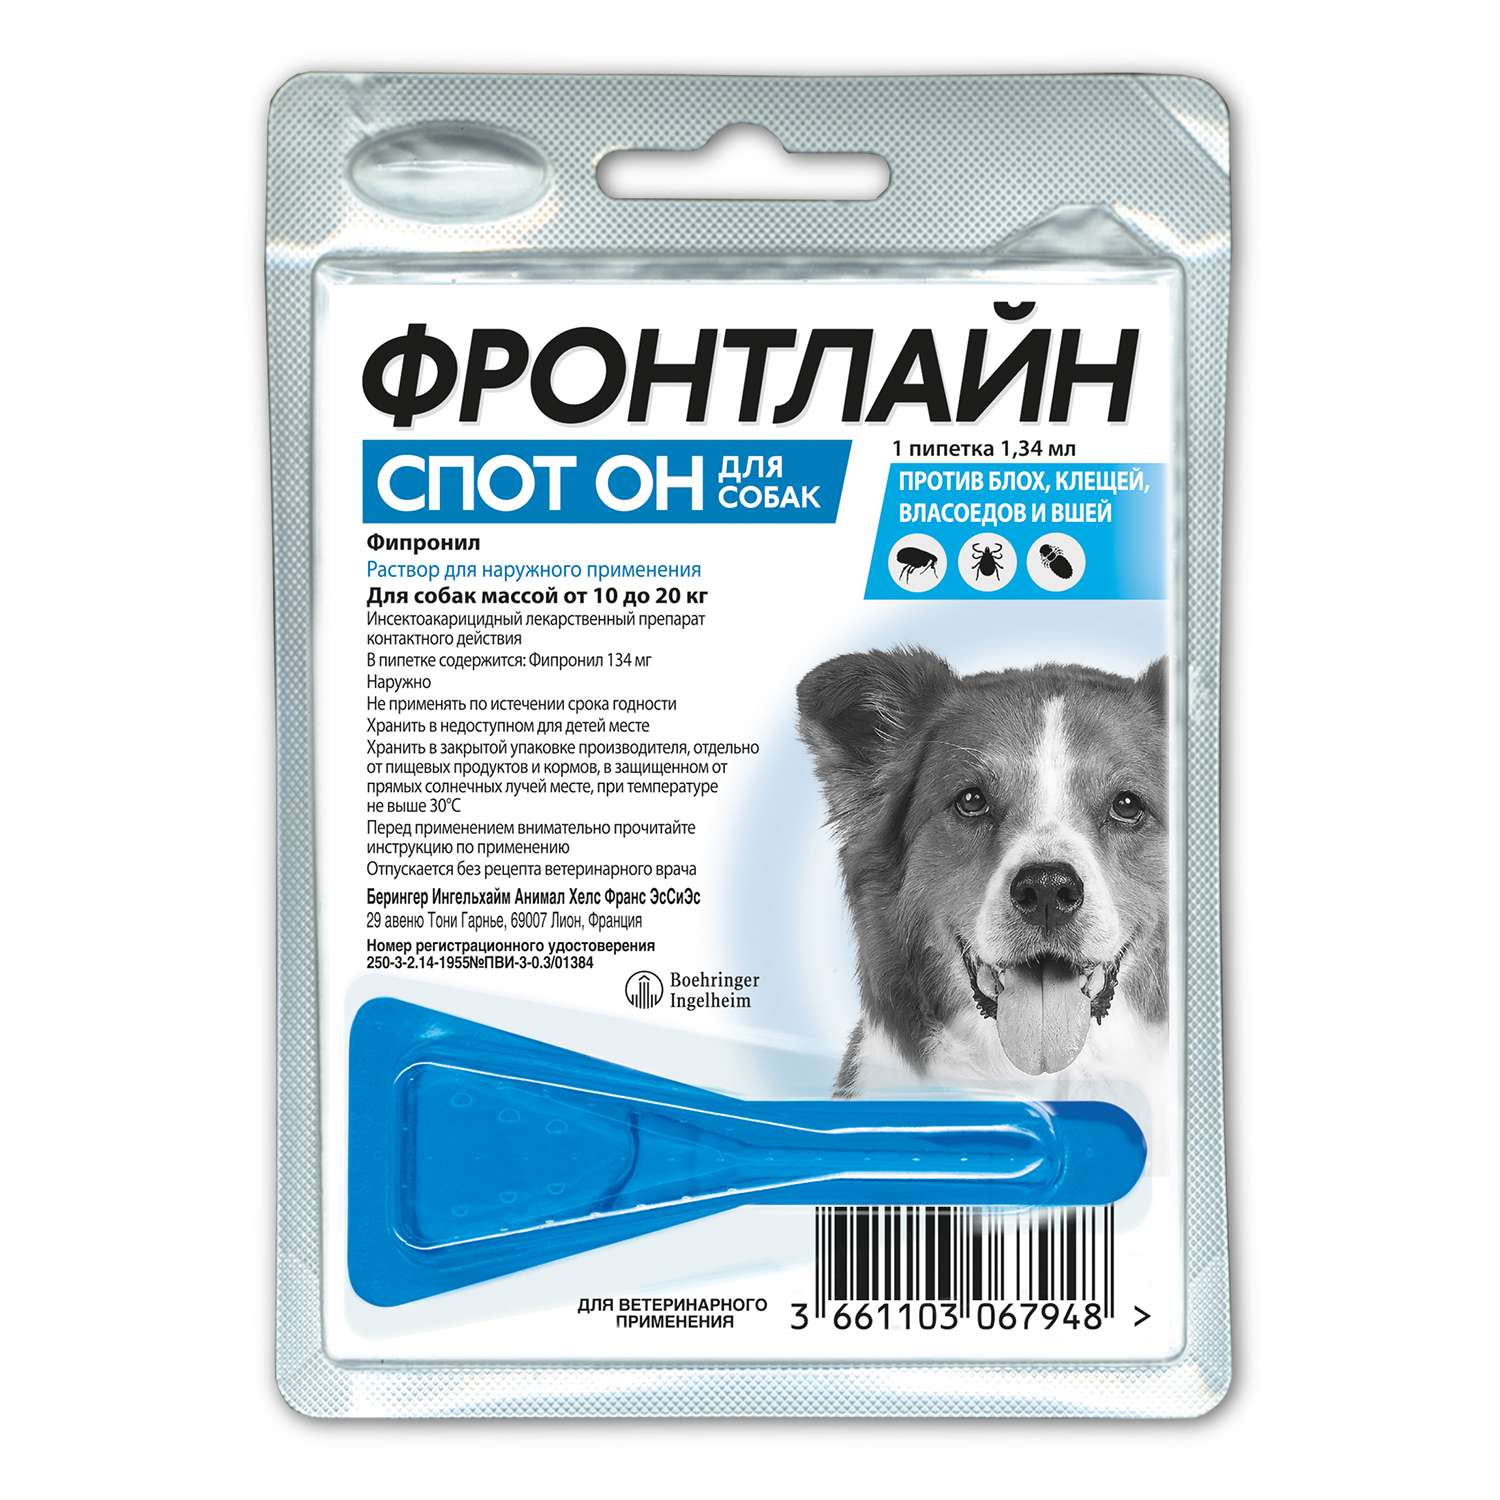 Препарат противопаразитарный для собак Boehringer Ingelheim Фронтлайн Спот-Он M 1.34г пипетка - фото 1